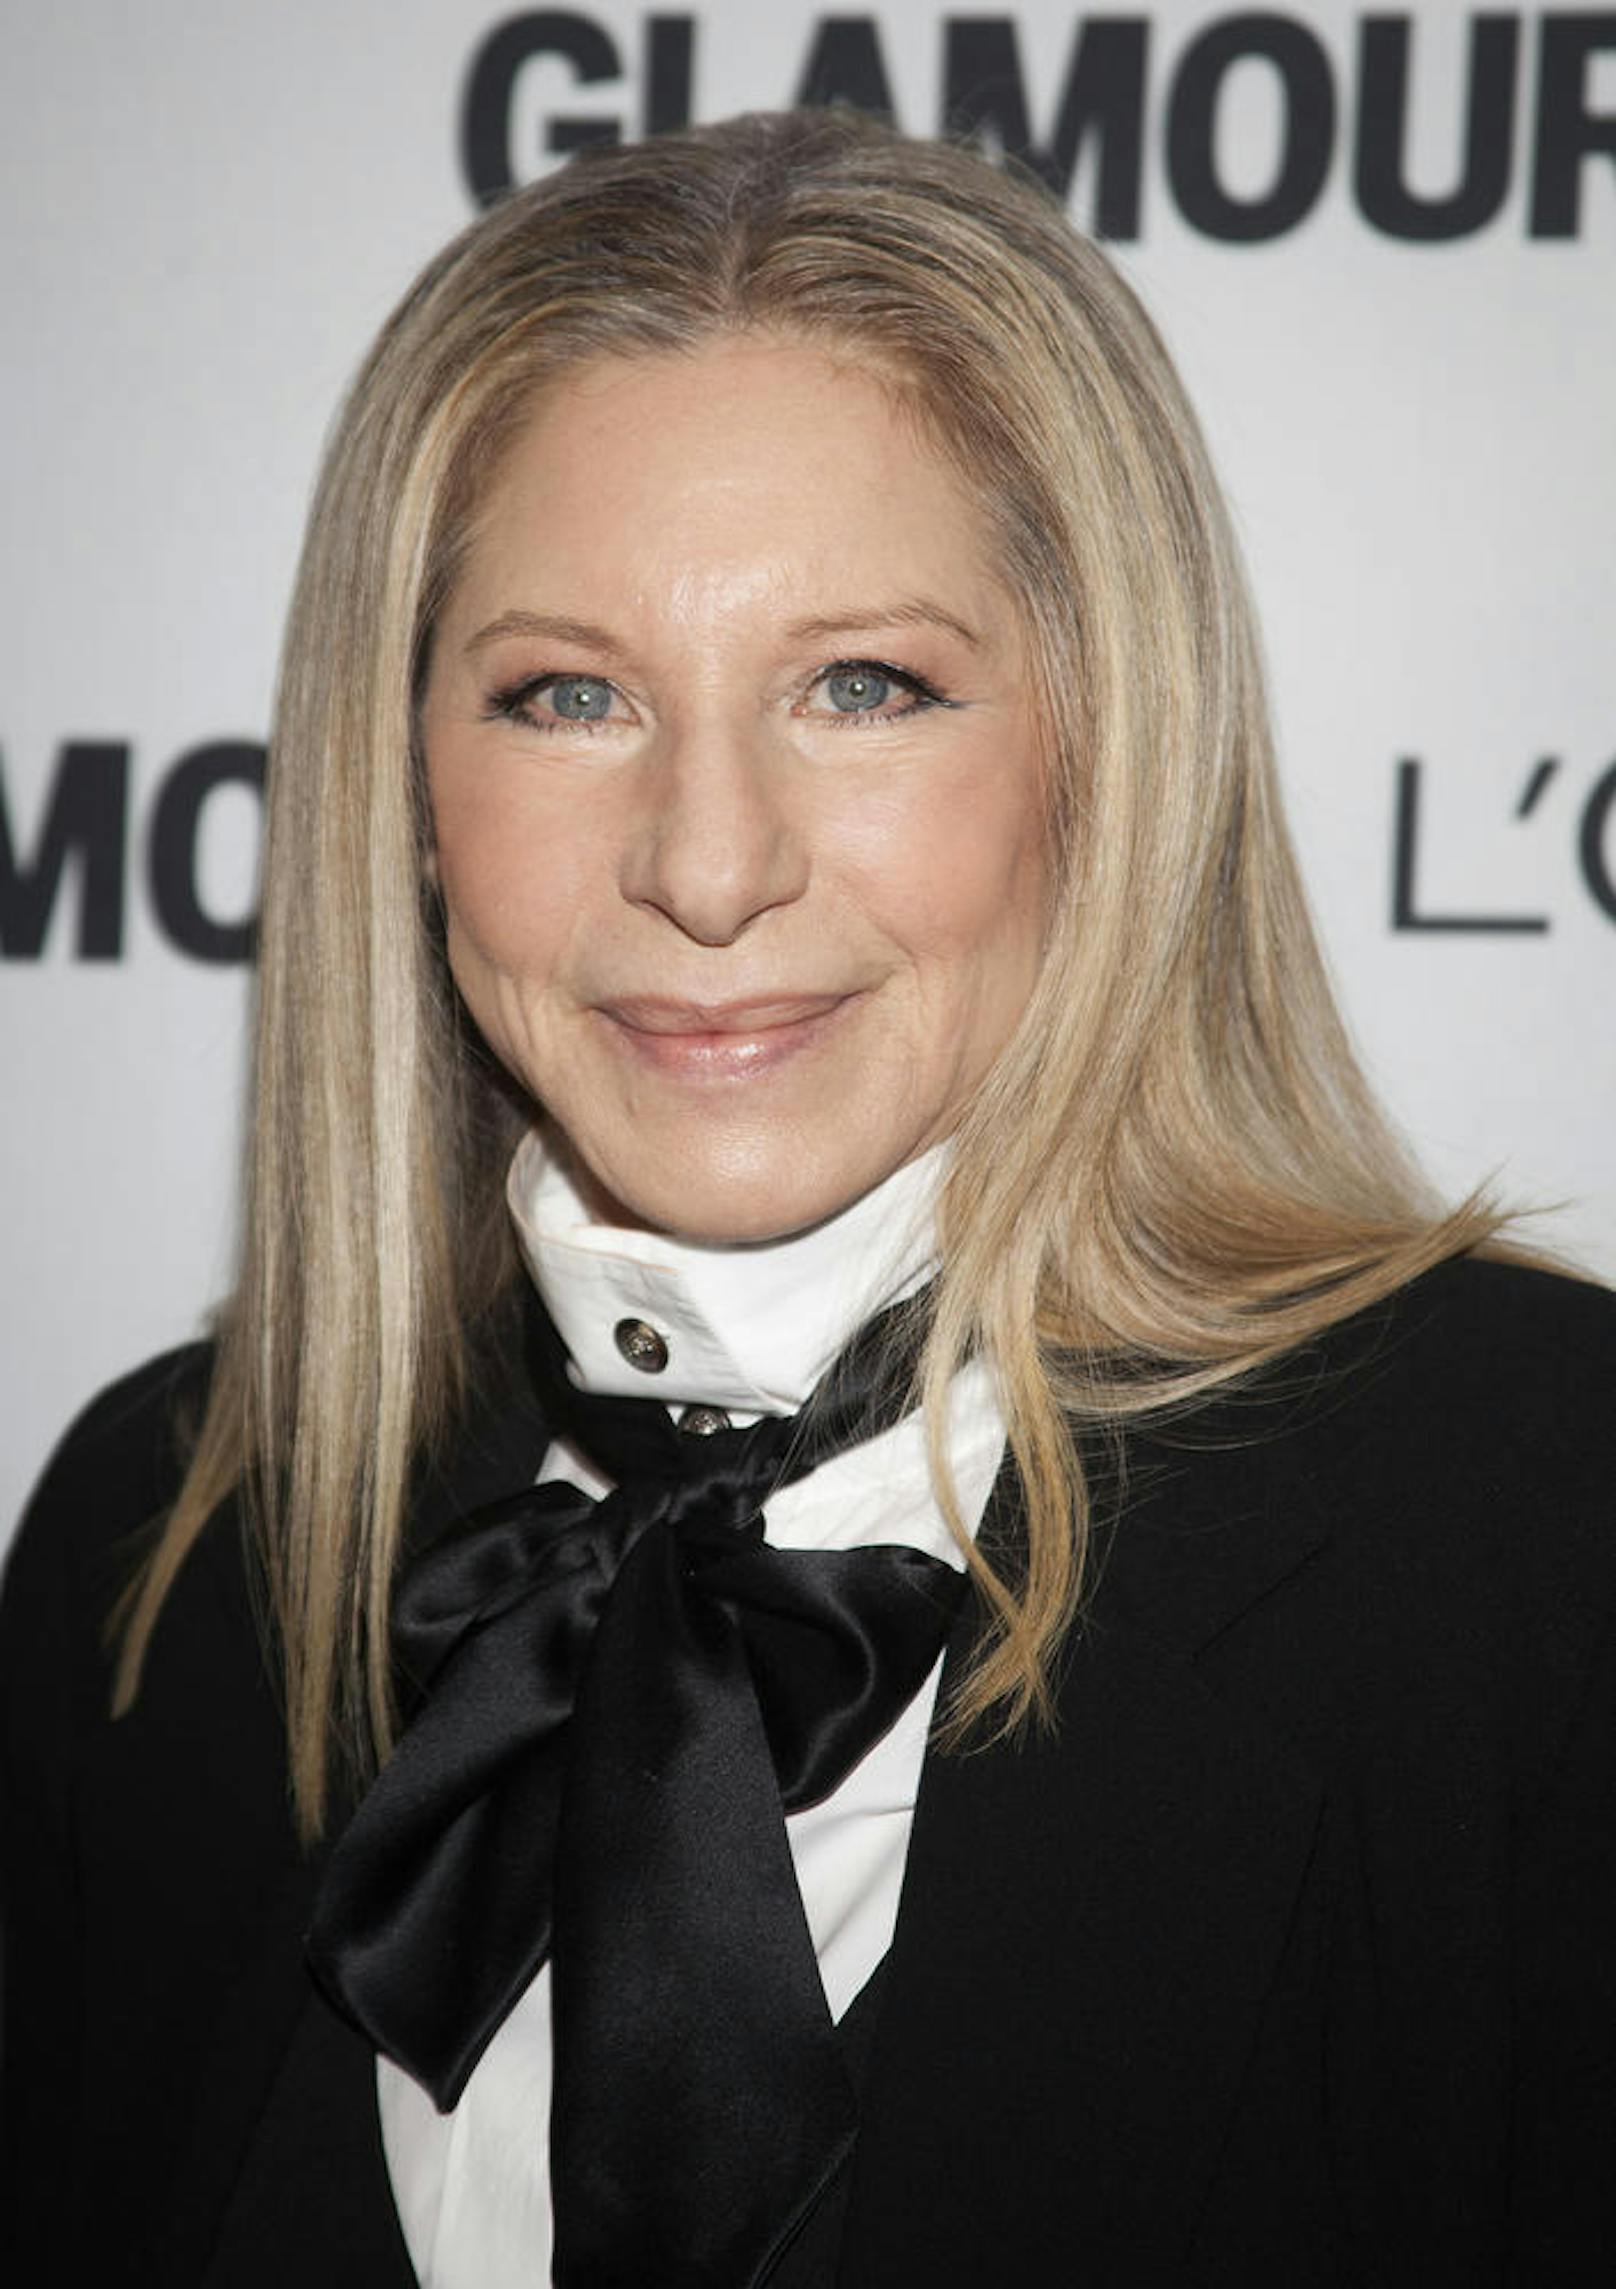 Barbra Streisand - Geburtstag: 24. April 1942 - Alter: 72